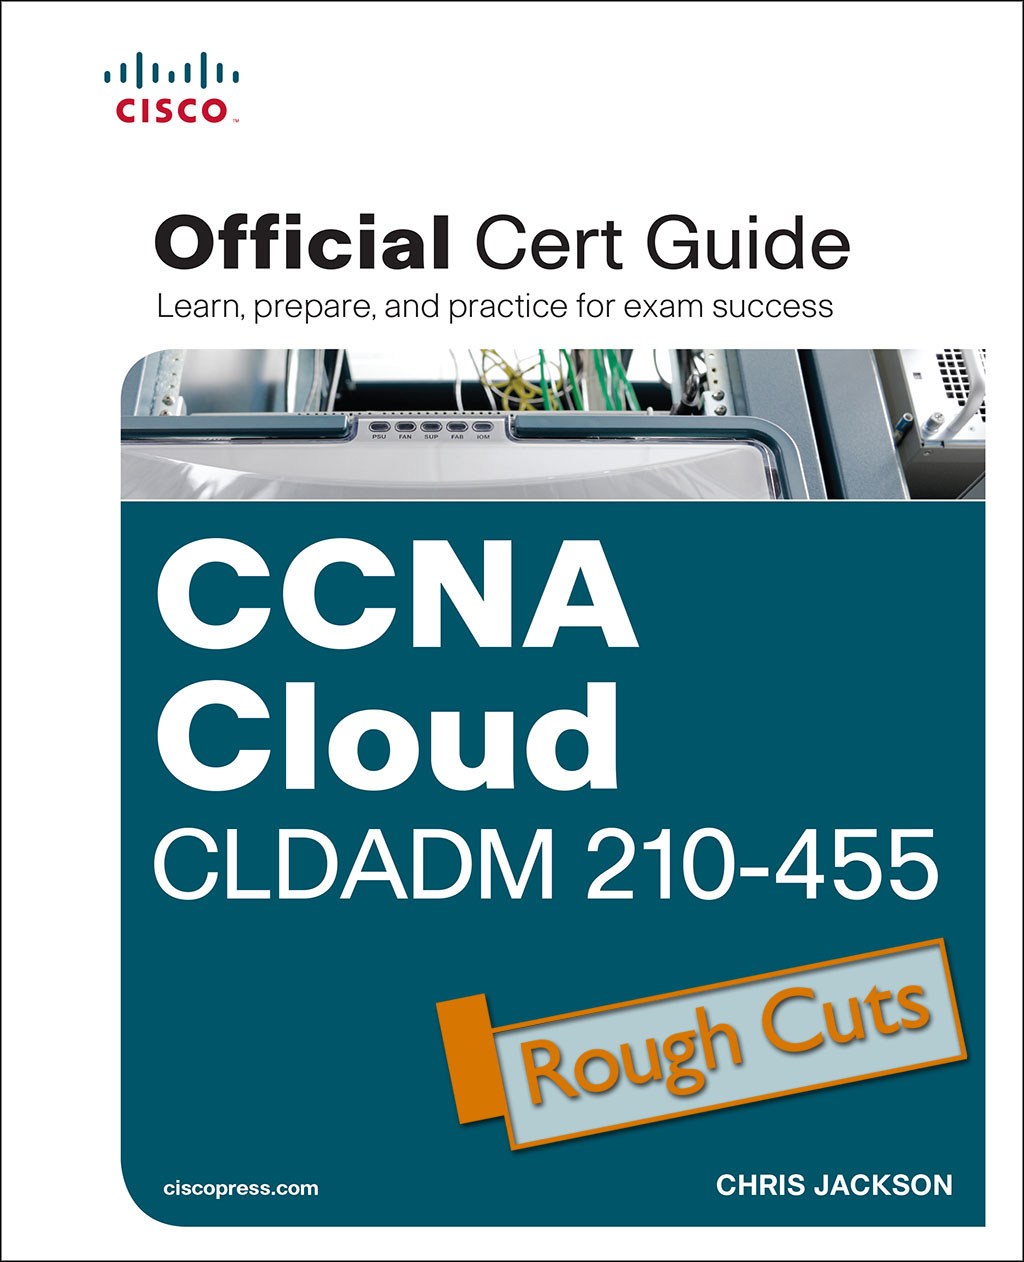 CCNA Cloud CLDADM 210-455 Official Cert Guide, Rough Cuts